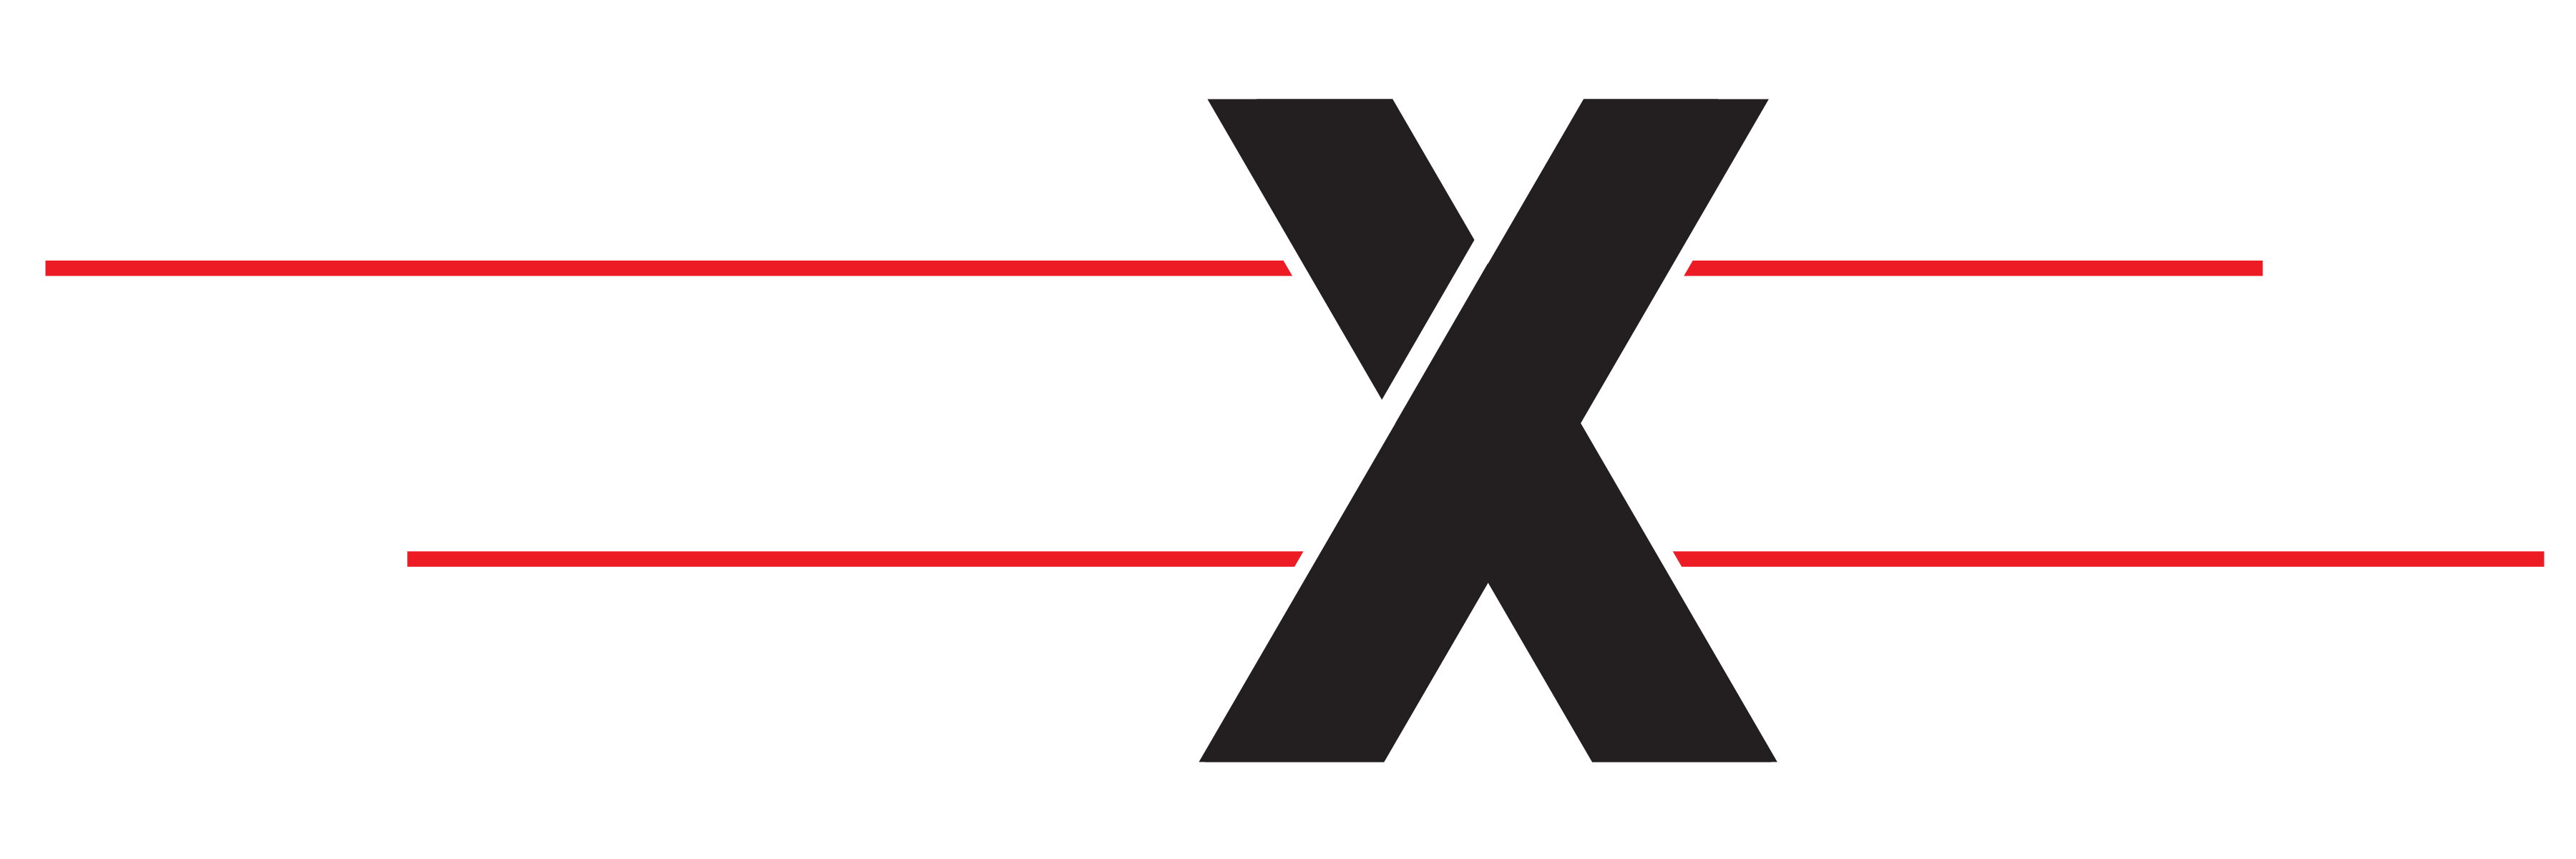 The System X logo in black